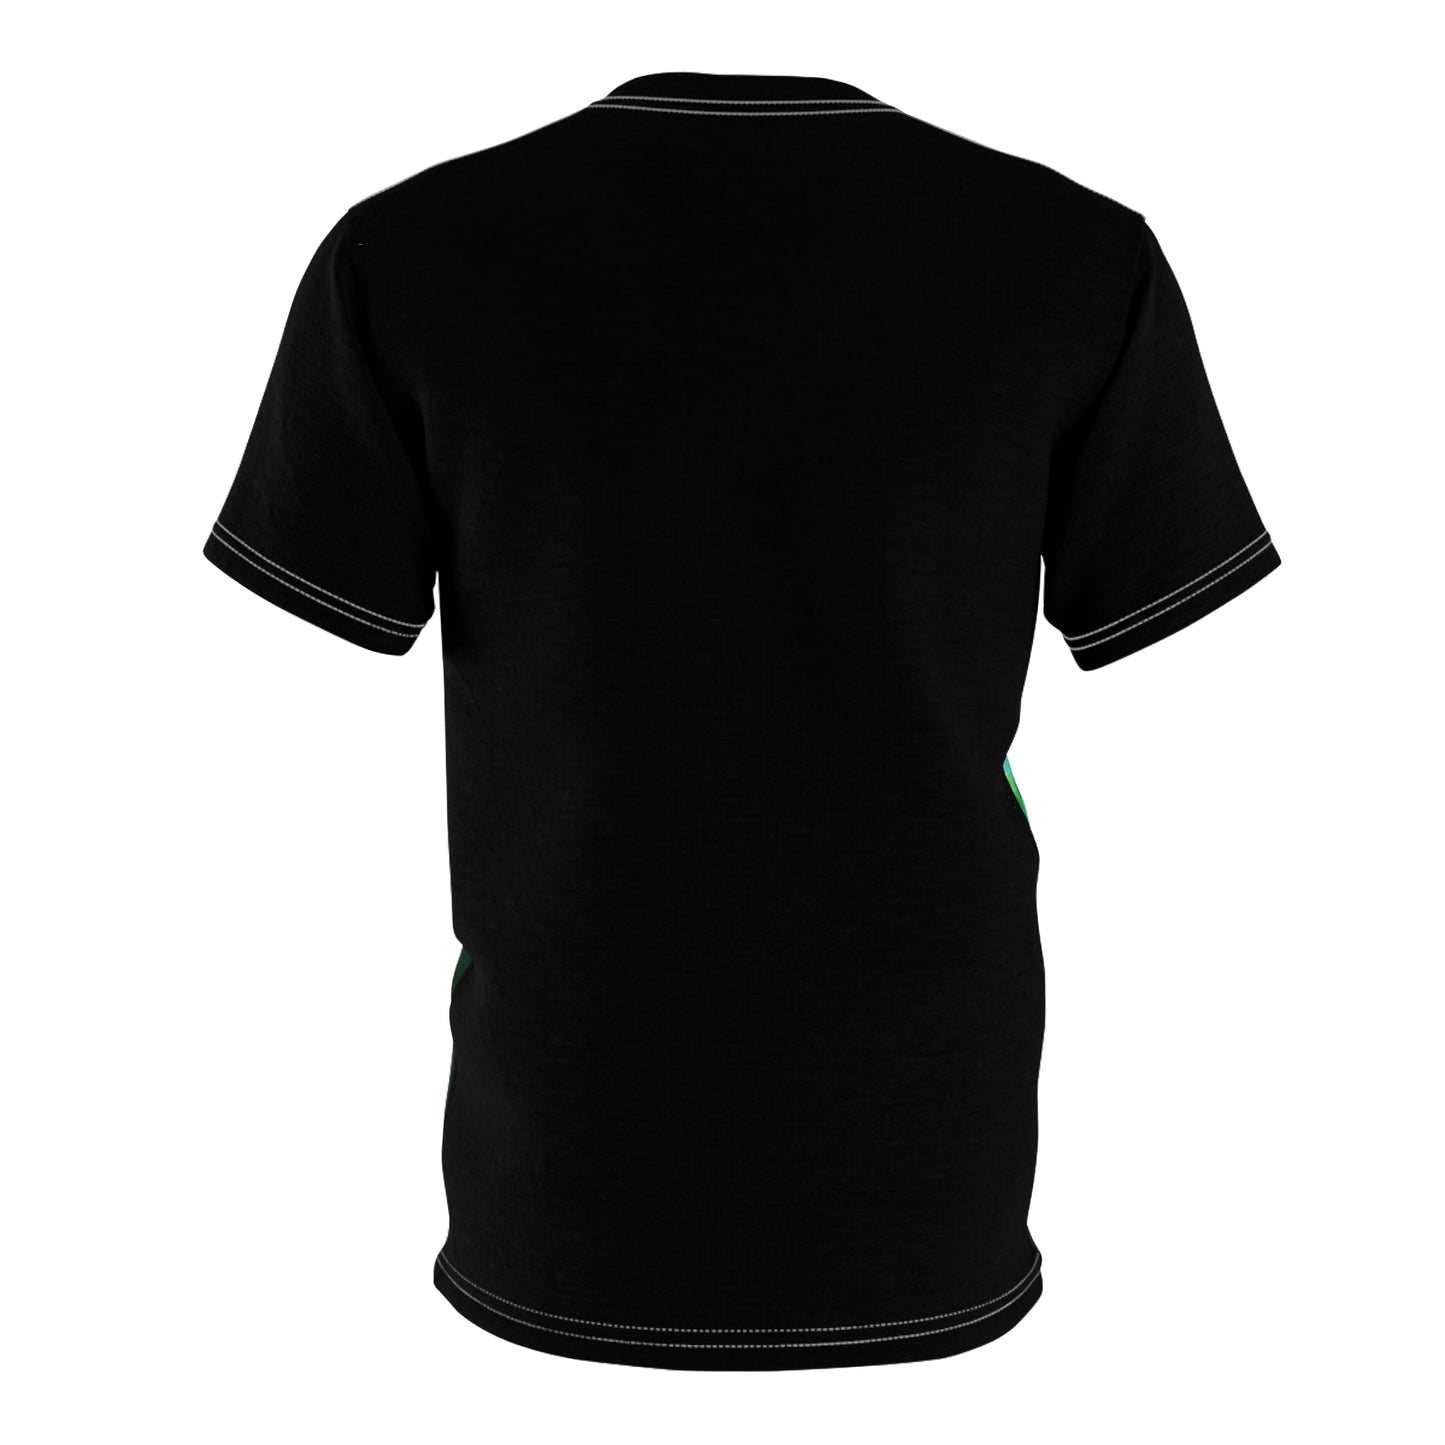 Jessica Strange - Unisex All-Over Print Cut & Sew T-Shirt